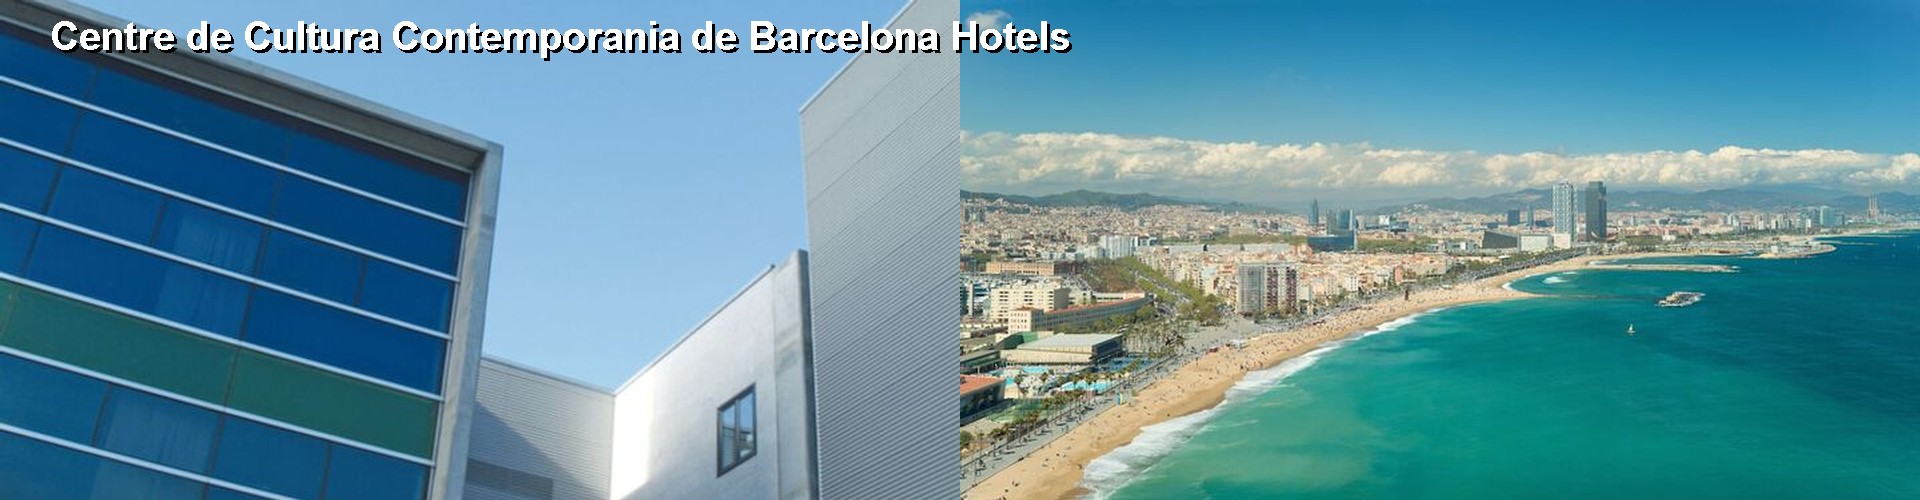 5 Best Hotels near Centre de Cultura Contemporania de Barcelona